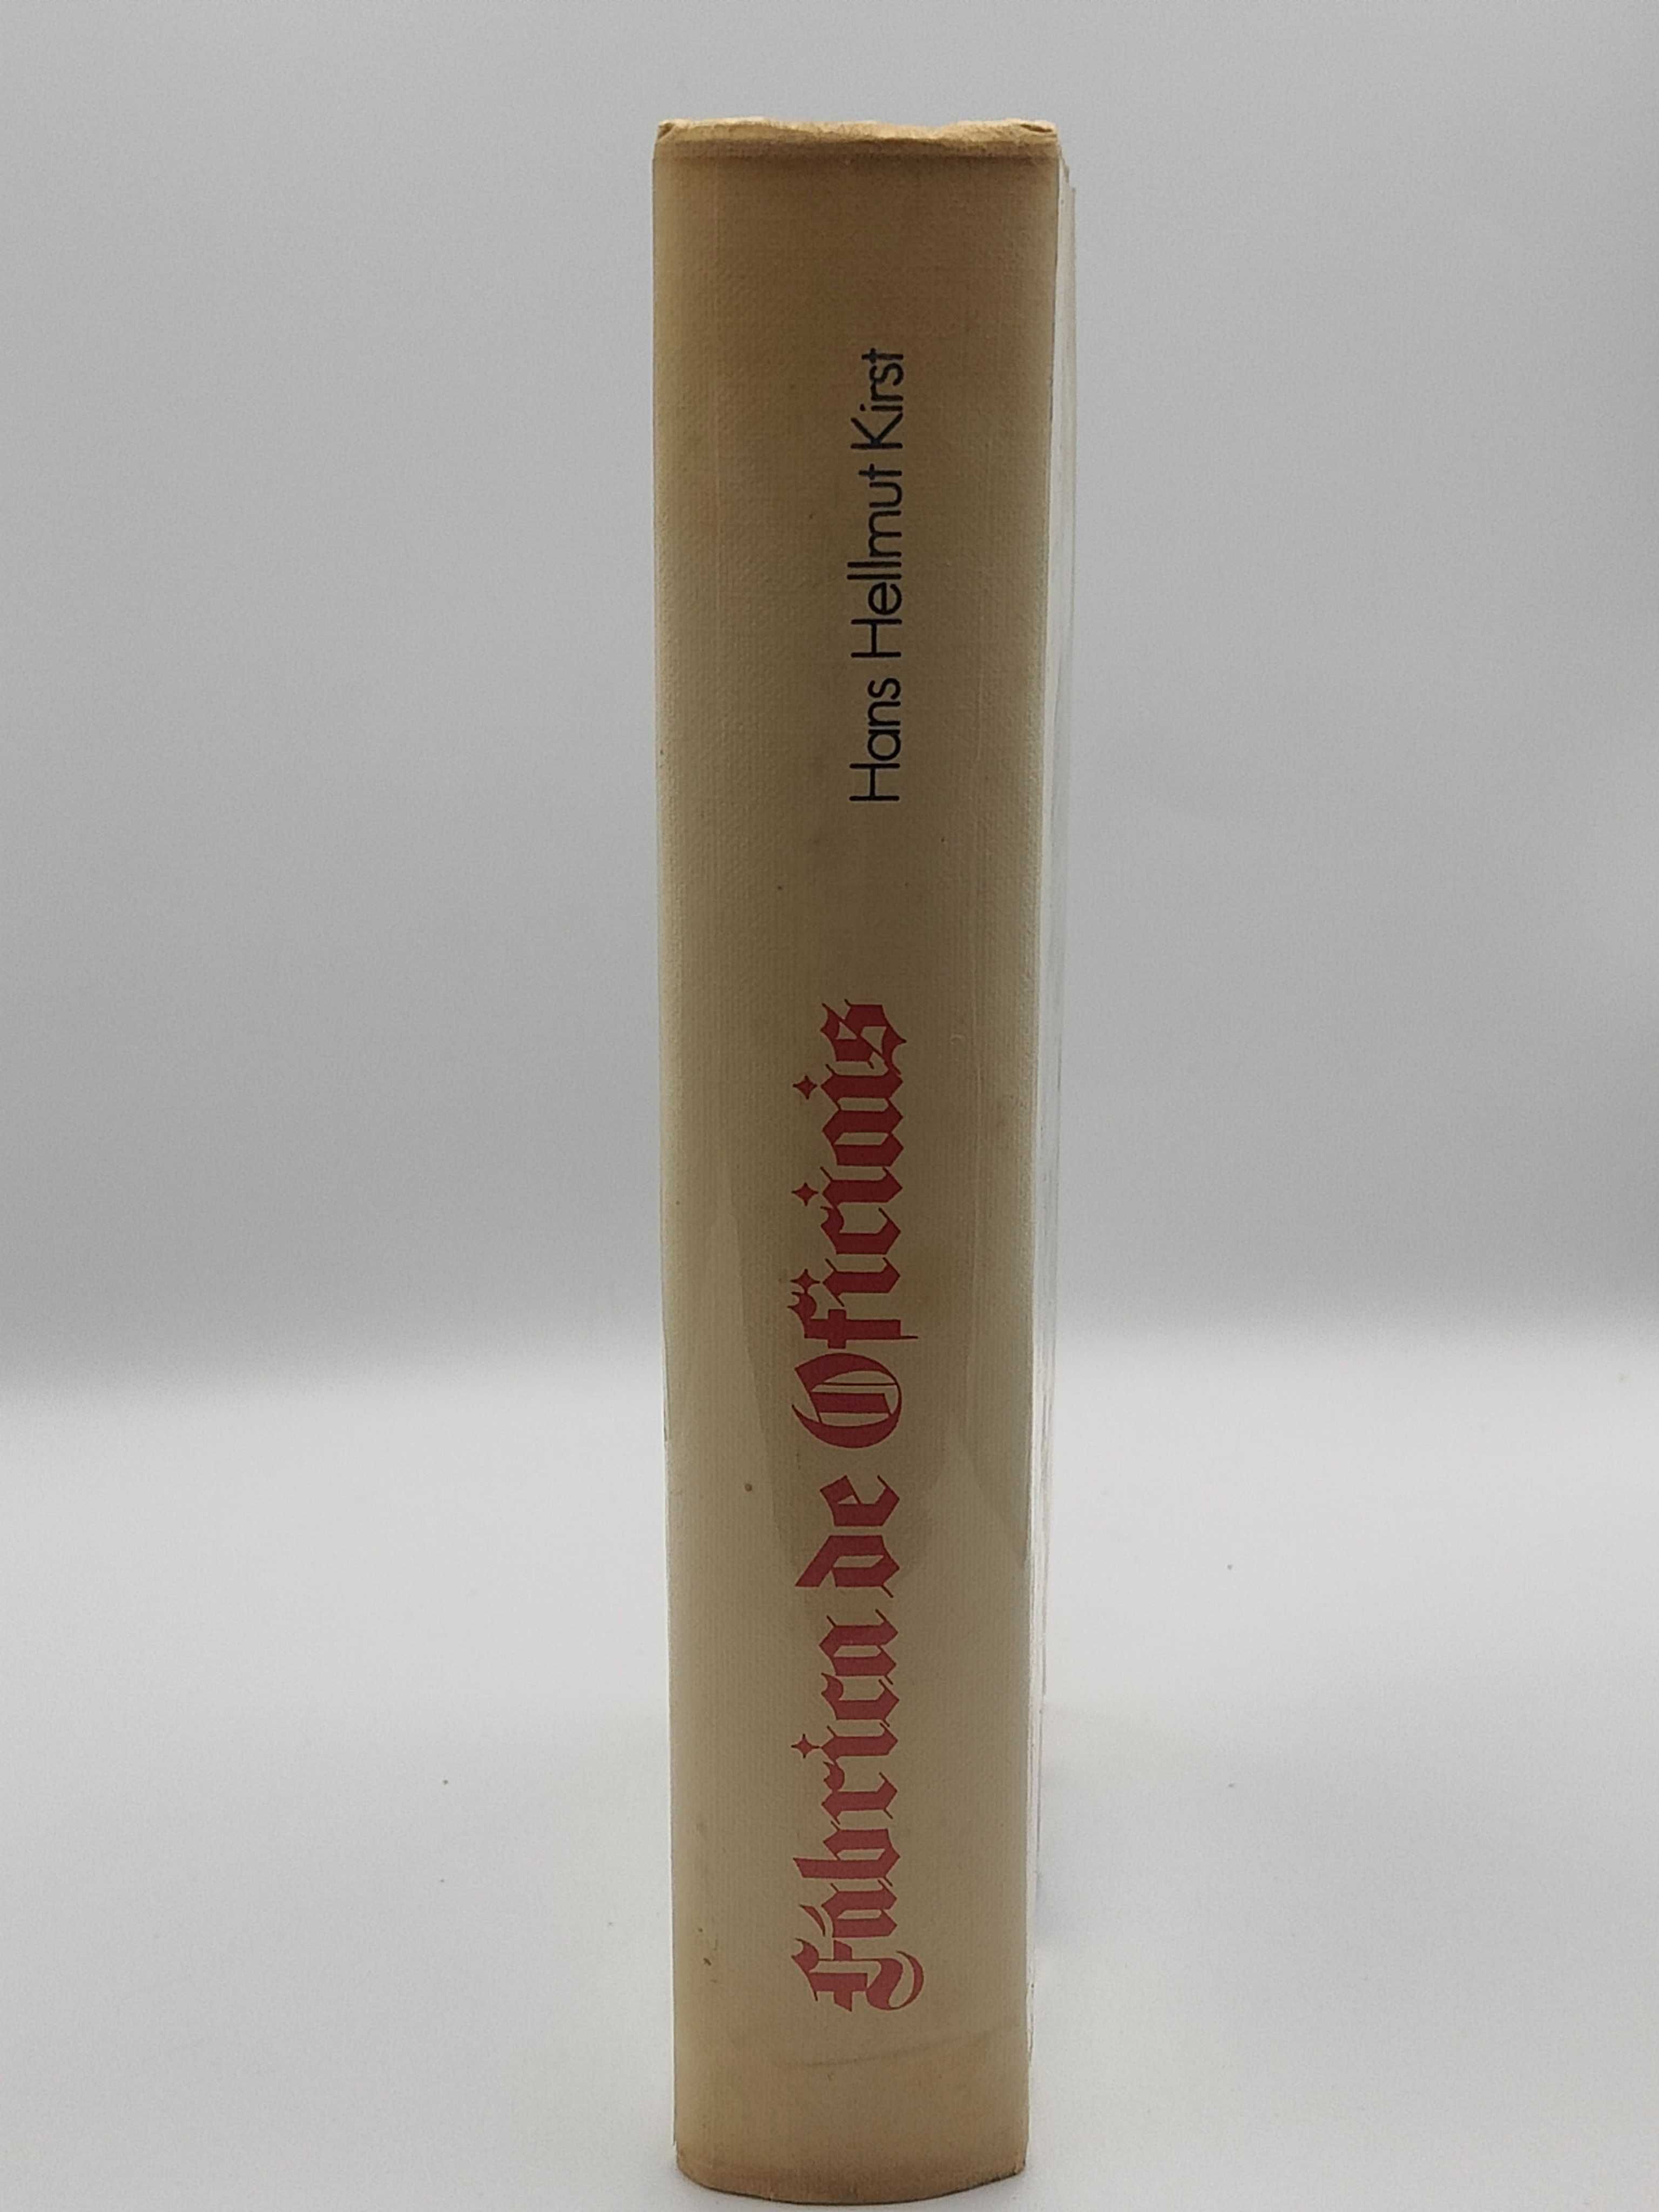 Livro Ref:PAR1 - Fábrica de Oficiais - Hans Hellmut Kirst